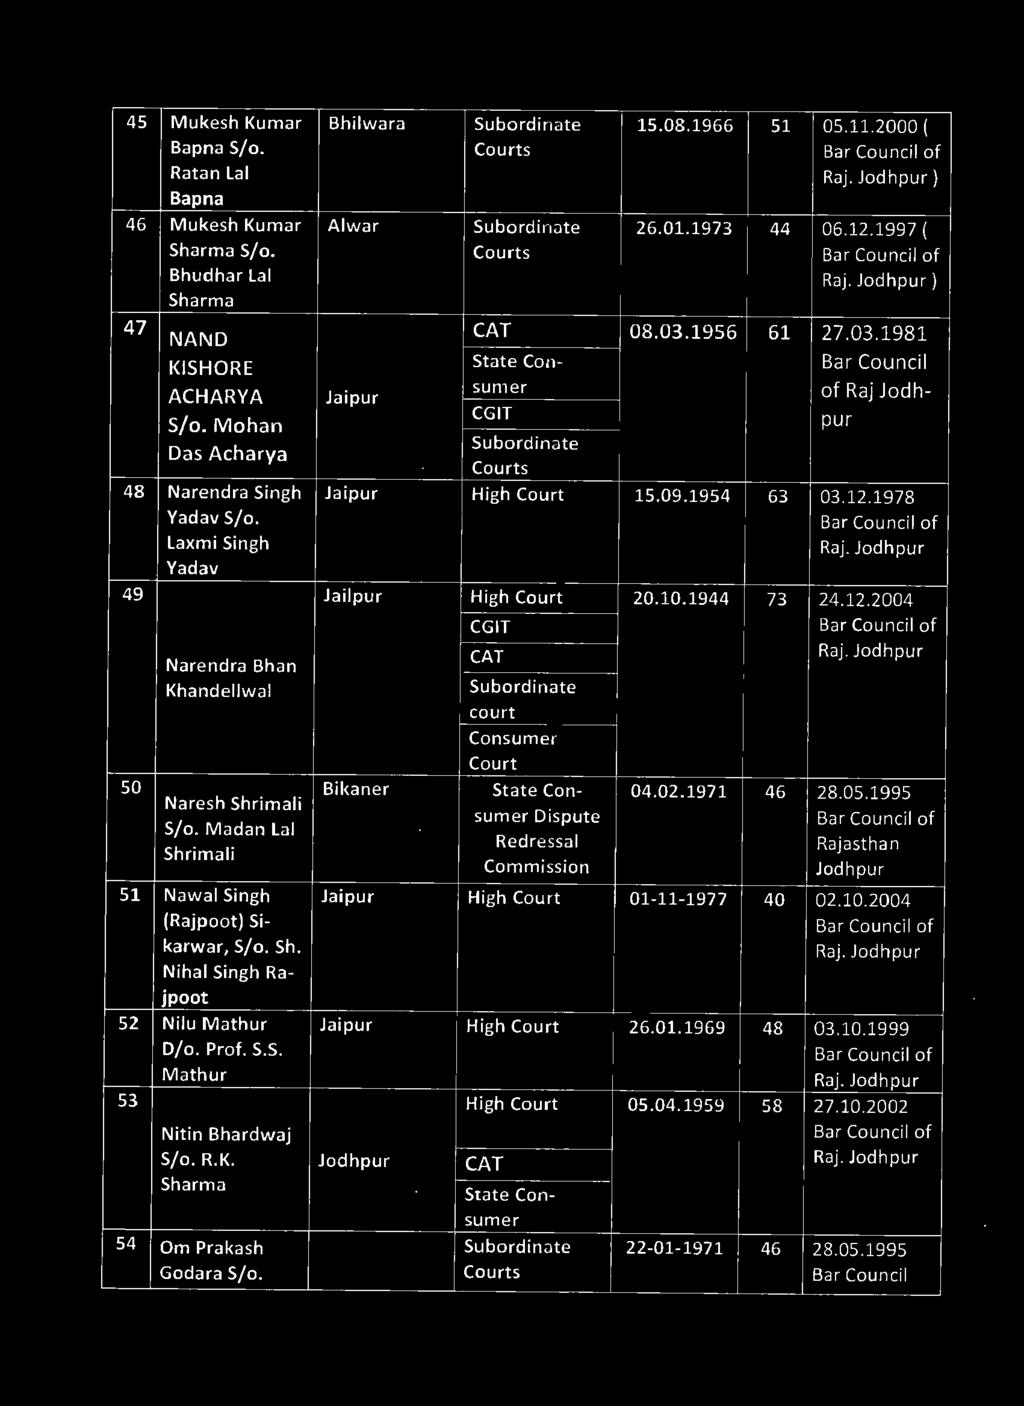 1944 73 24.12.2004 Narendra Bhan Khandellwal court Con so Bikaner State Con- 04.02.1971 46 28.05.1995 Naresh Shrimali S/o.